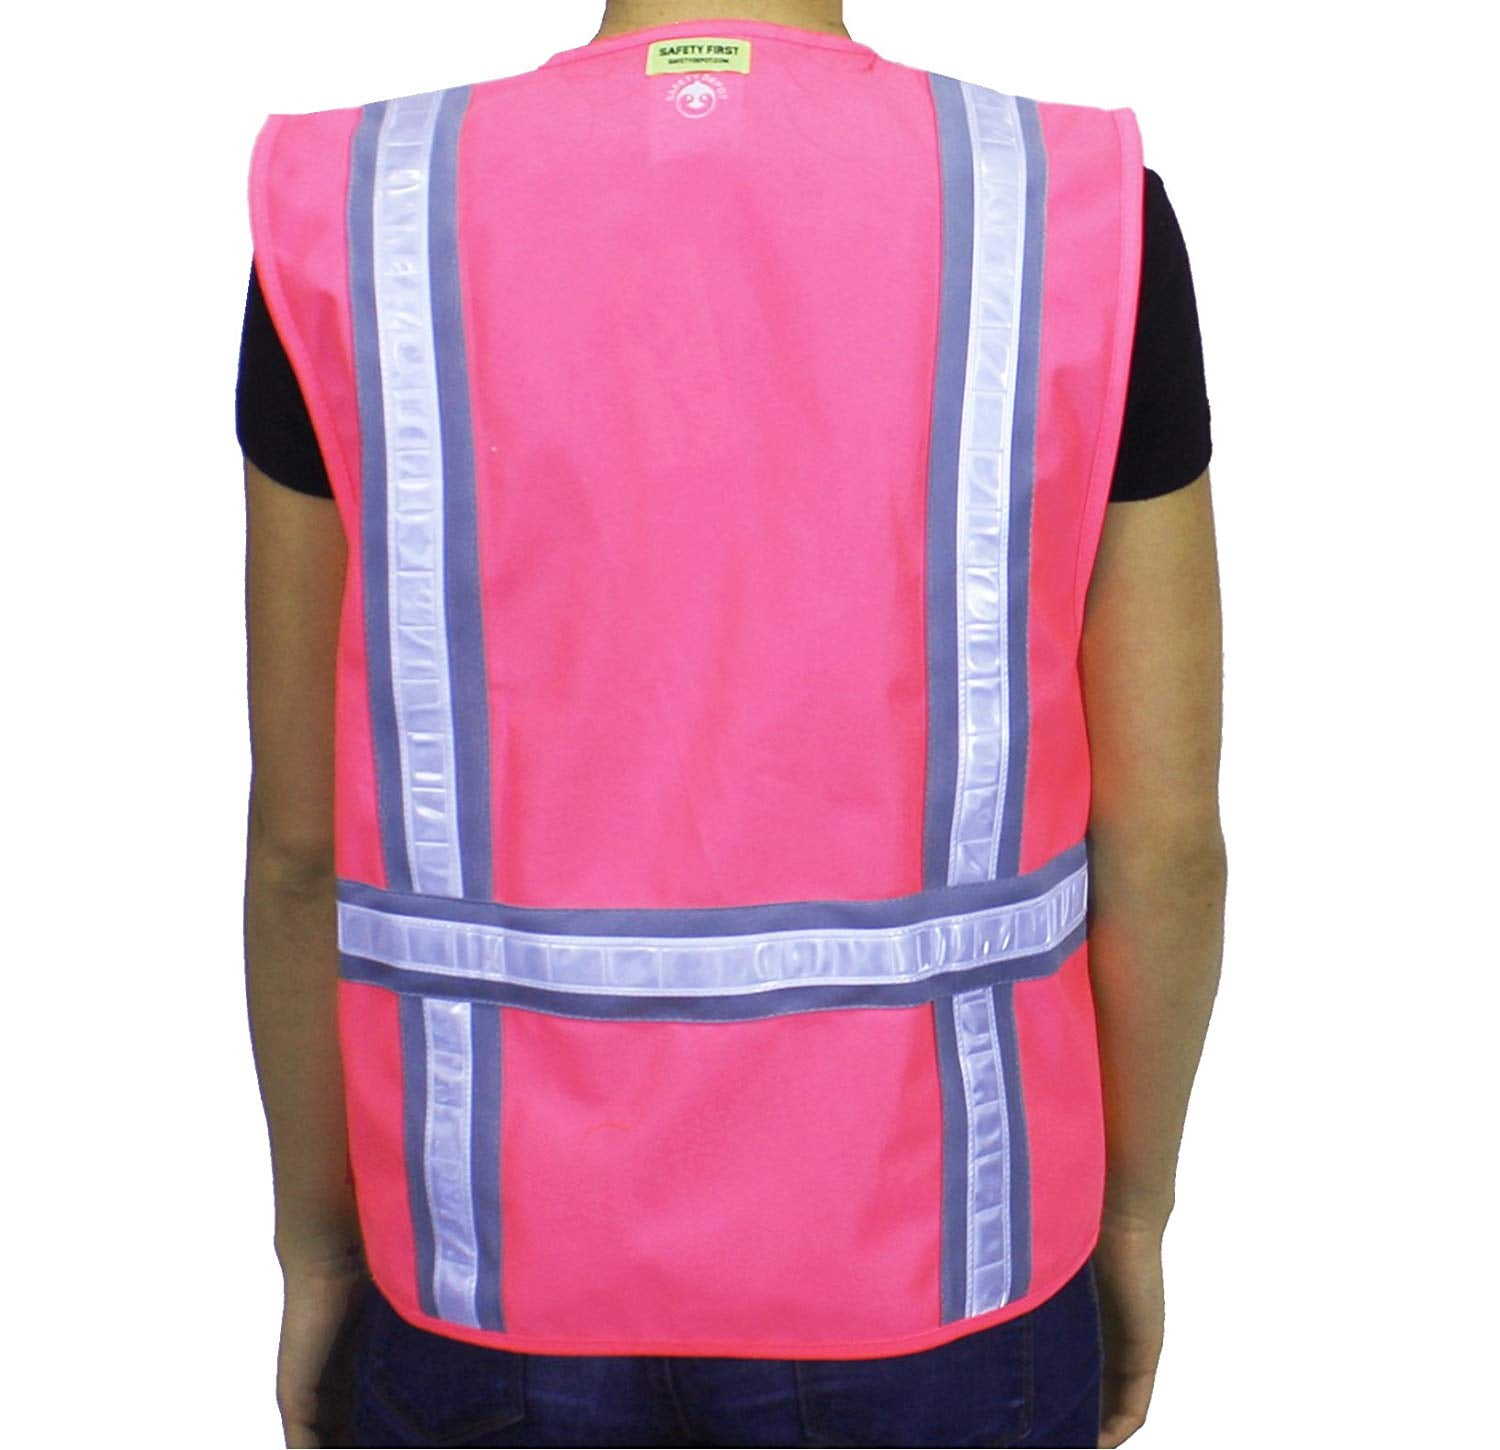 Reflective Safety Vest in Louisville, KY 40219